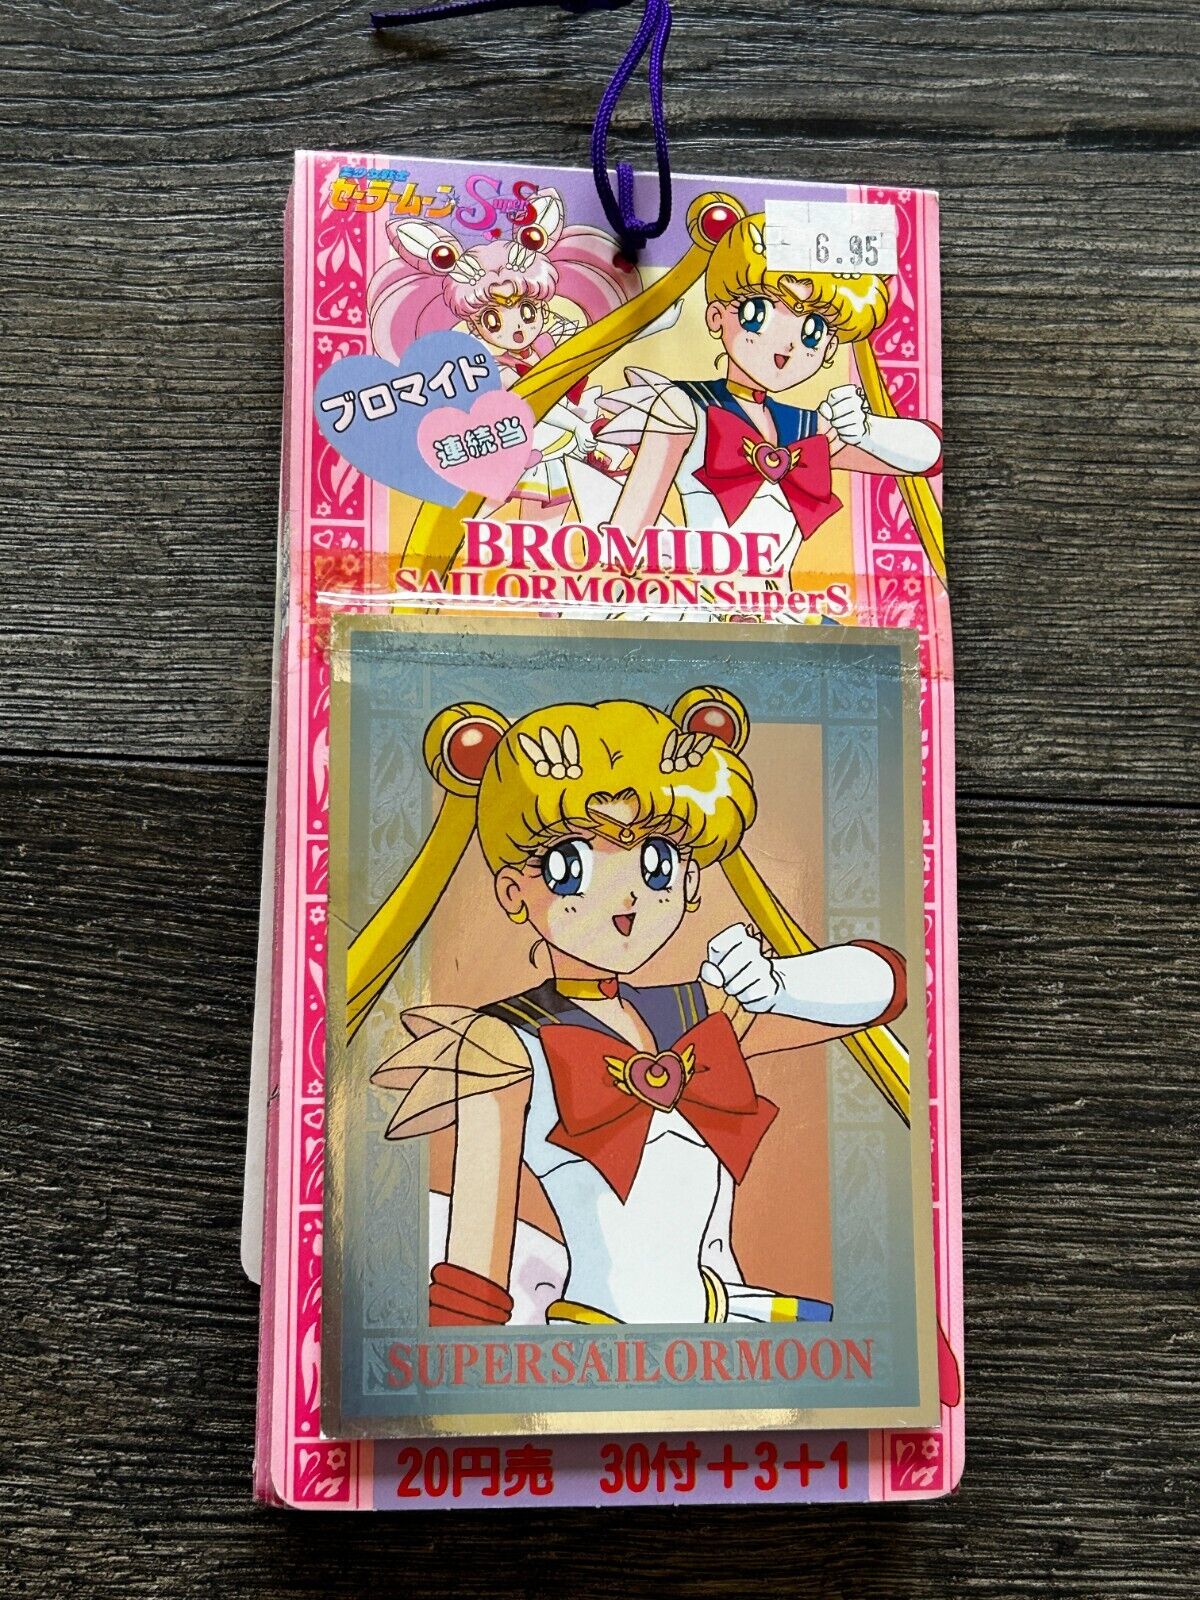 Super S Sailor Moon Bromide Pull Pack Prism Card 34 Packs Japan Manga Anime 1995